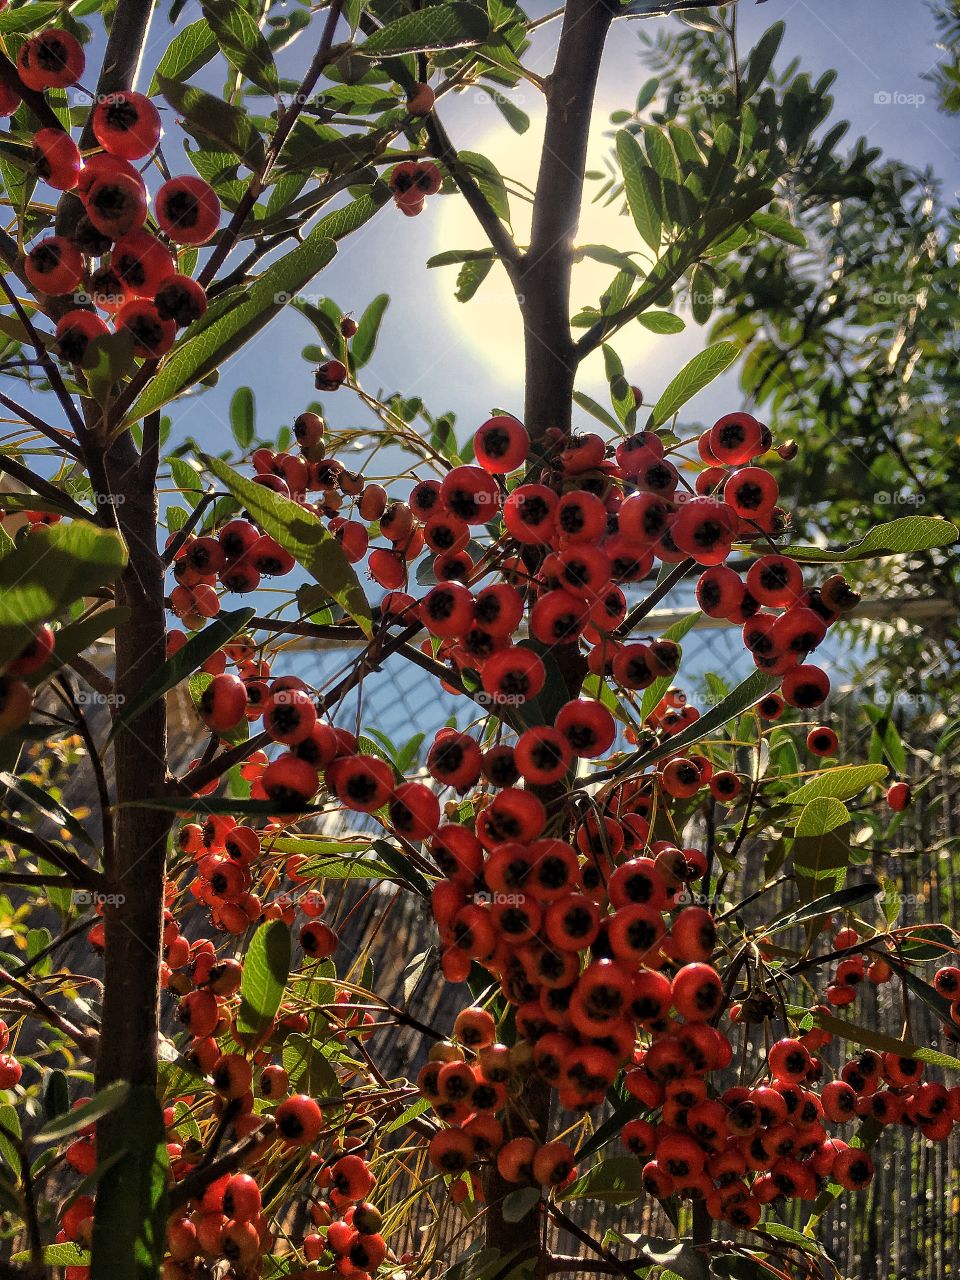 Berries in the sun 